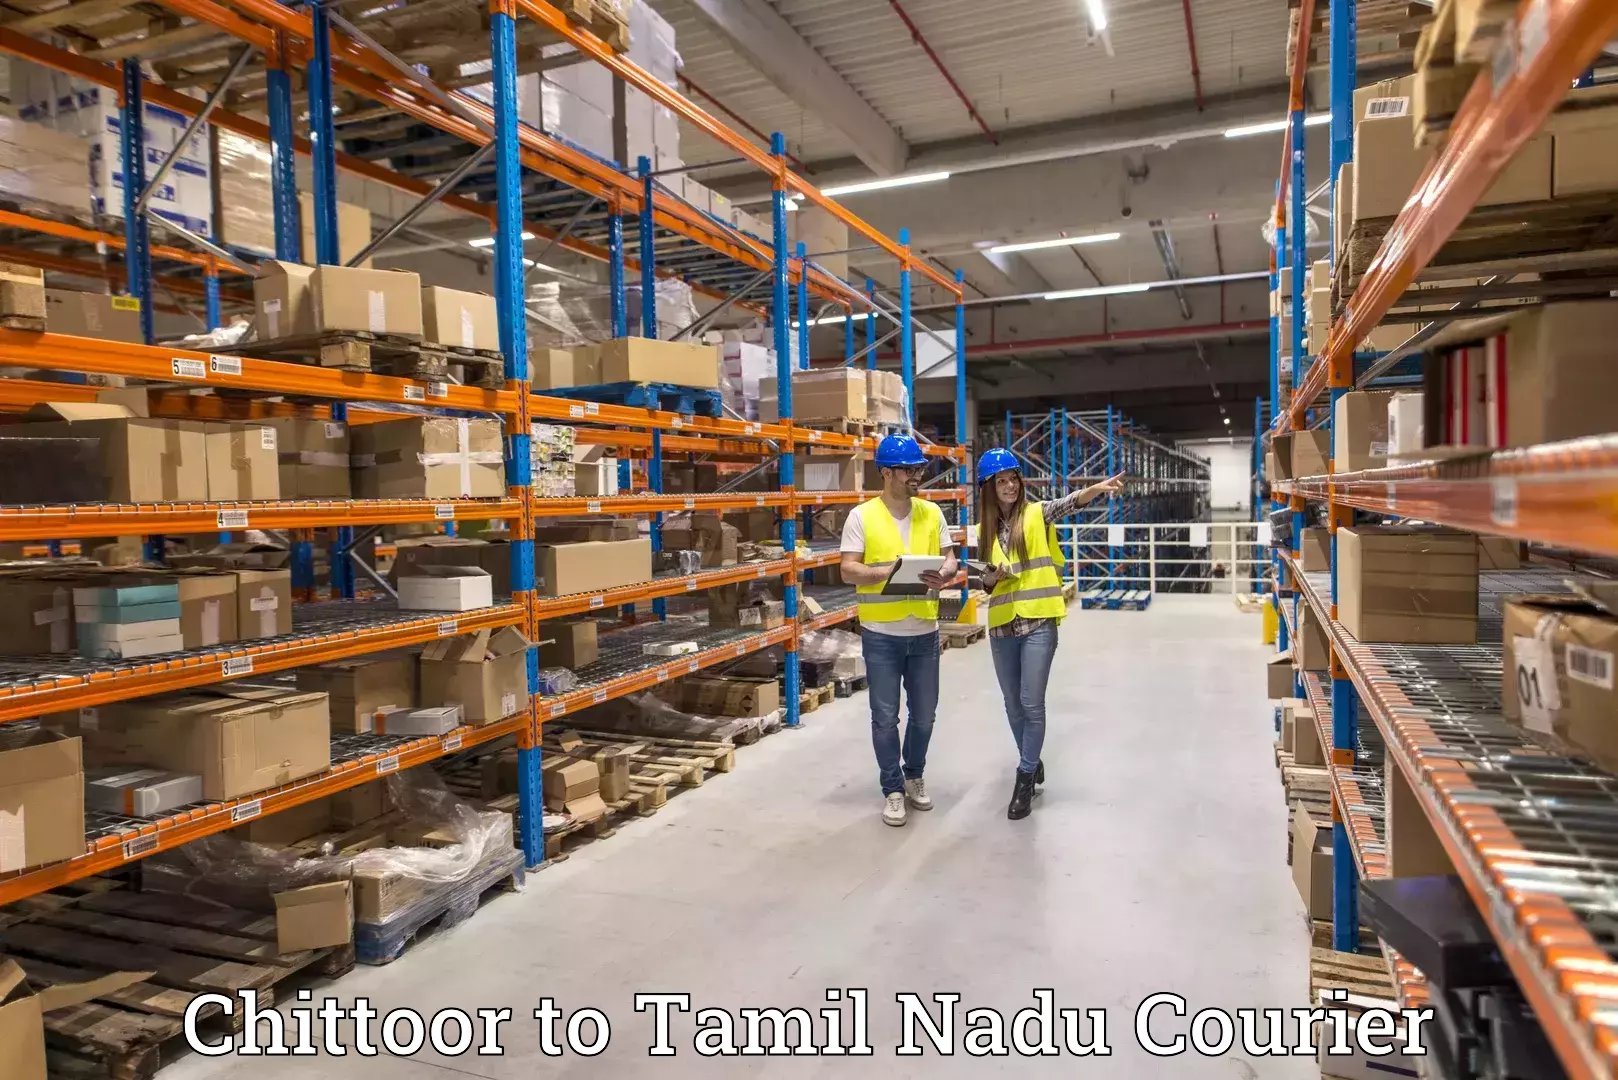 Courier insurance Chittoor to Tirunelveli